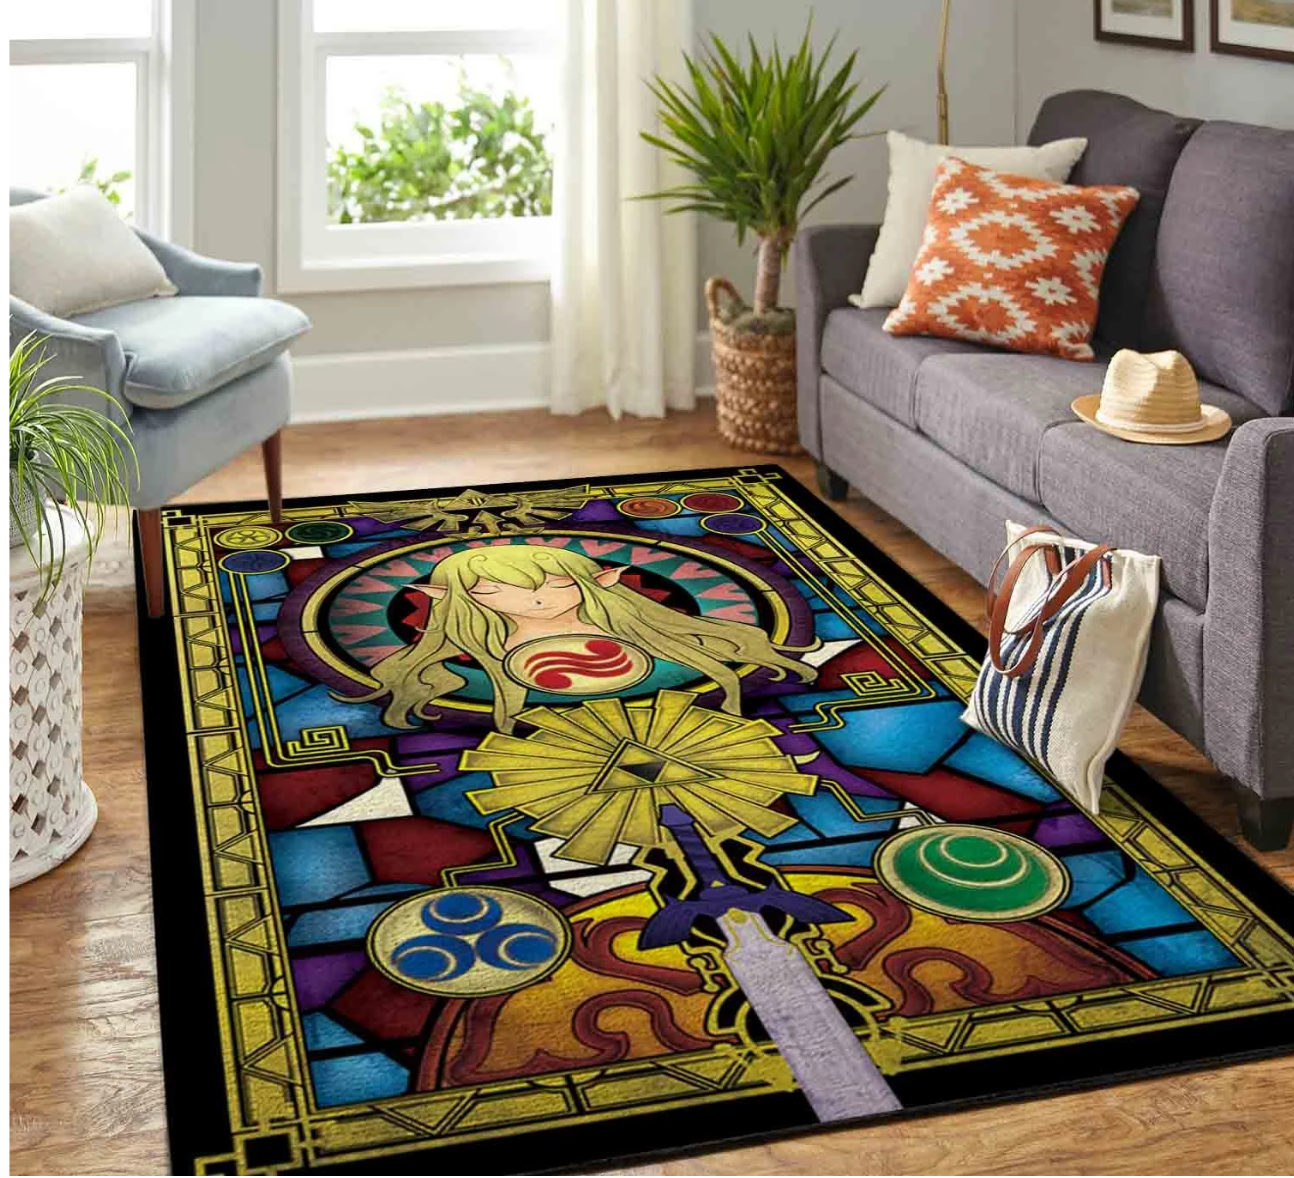 The Legend Of Zelda Art Carpet Area Rug Floor Home Room Decor Room Décor